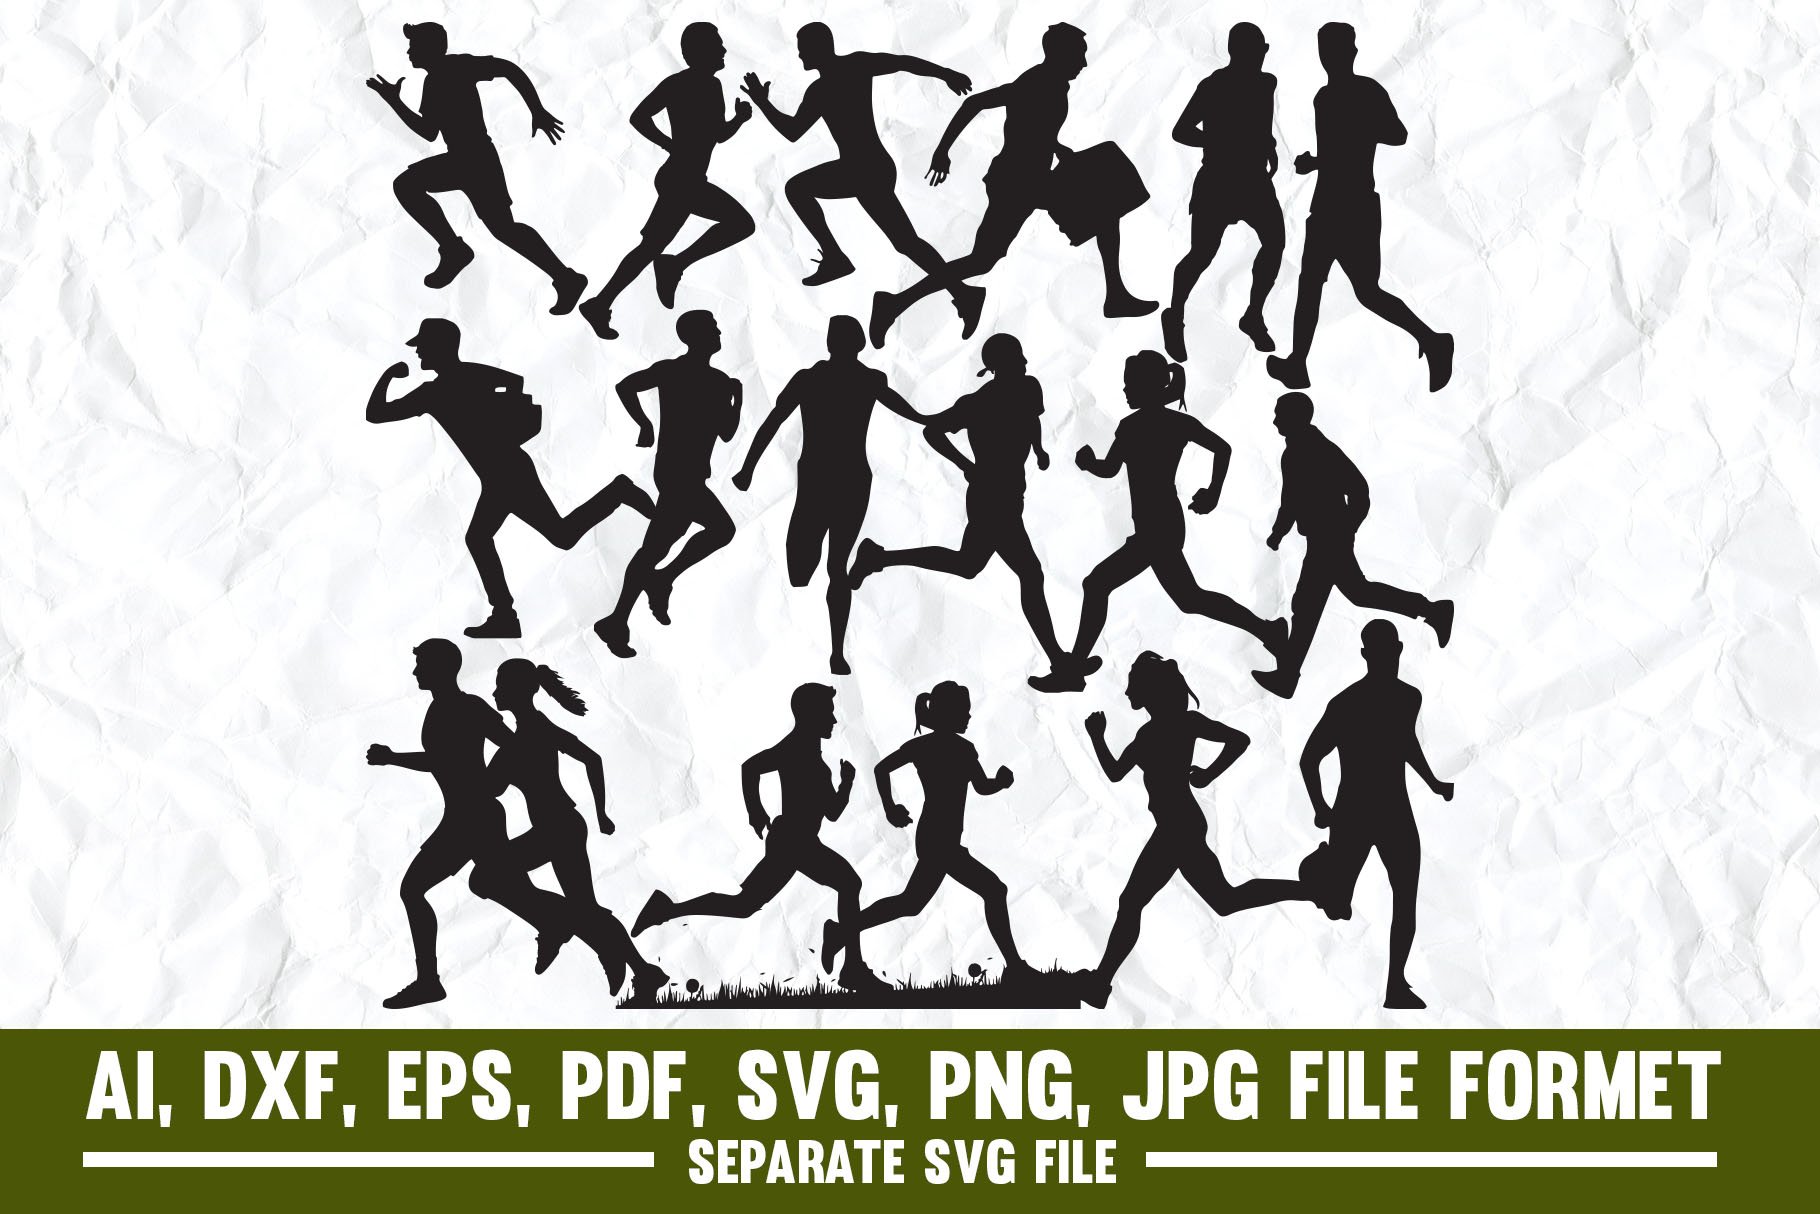 Running,run,runner,marathon,gym cover image.